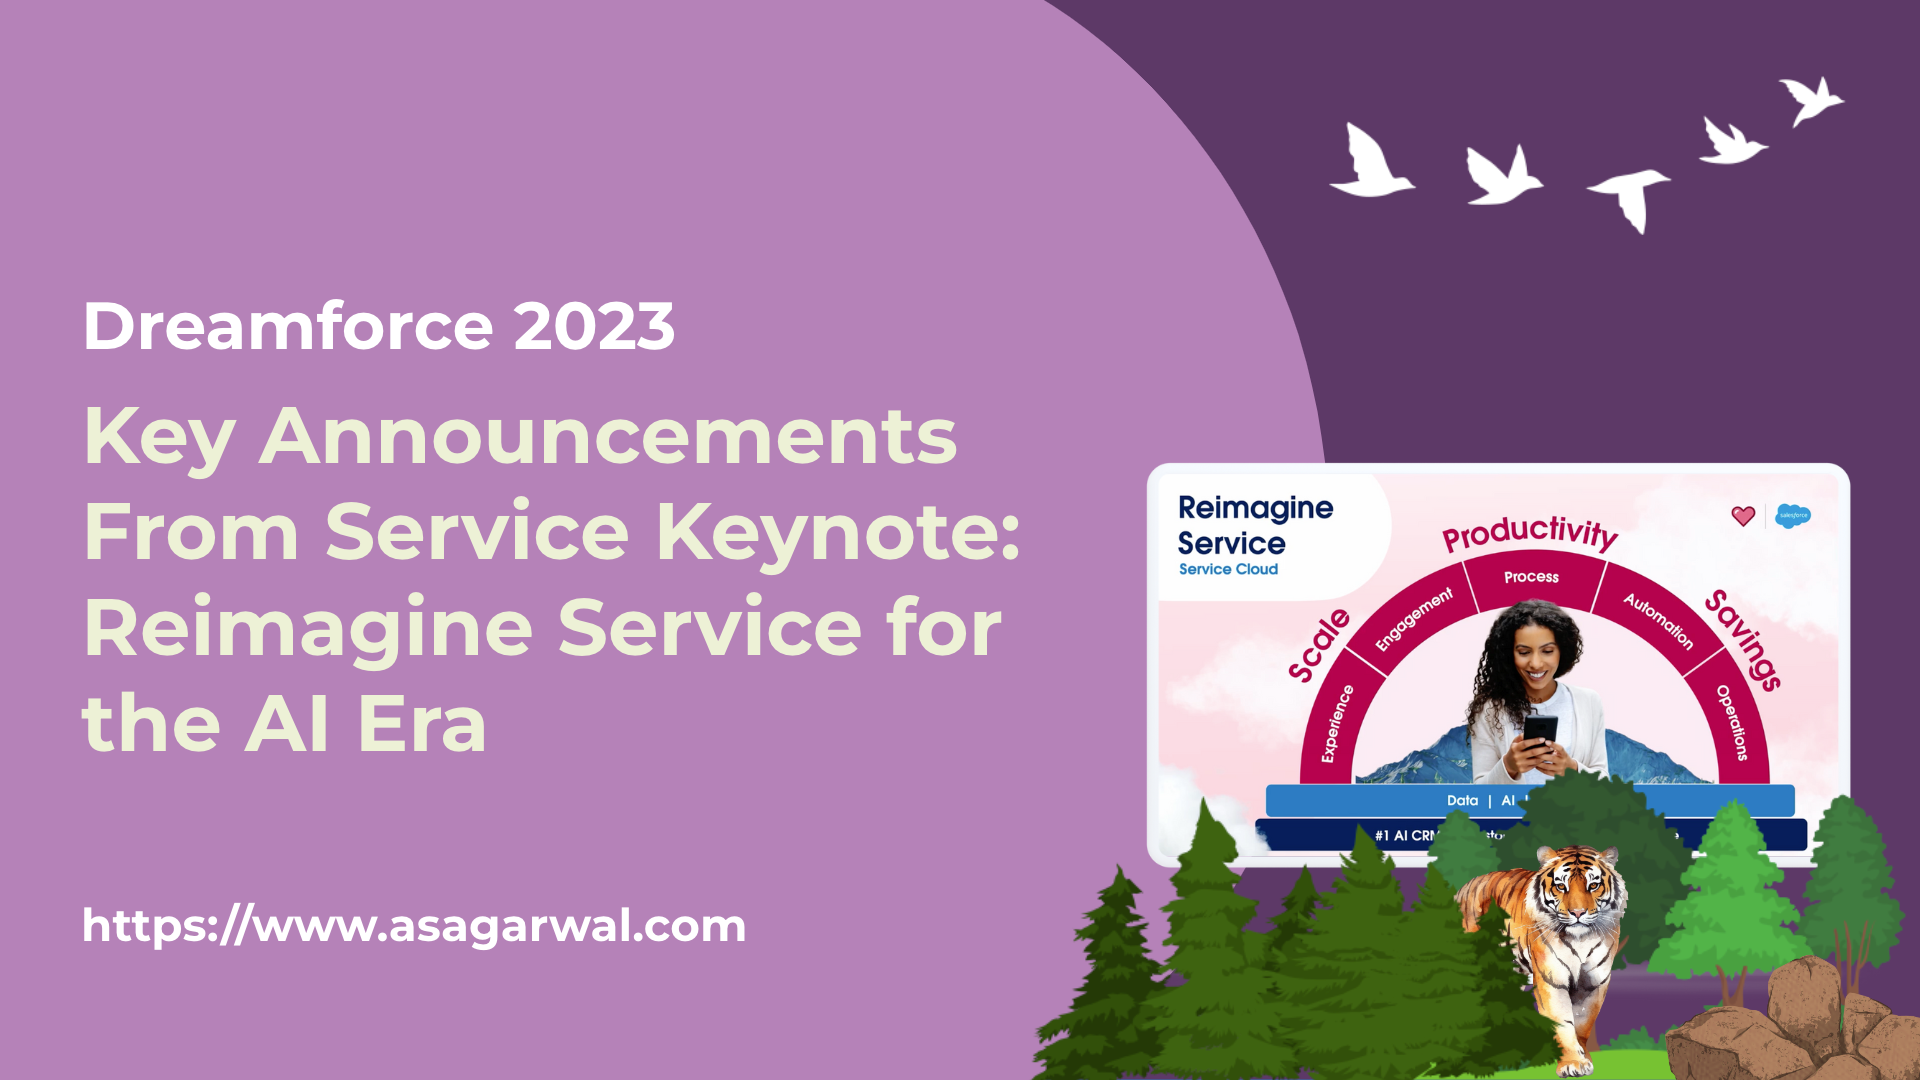 Dreamforce 2023 Service Keynote